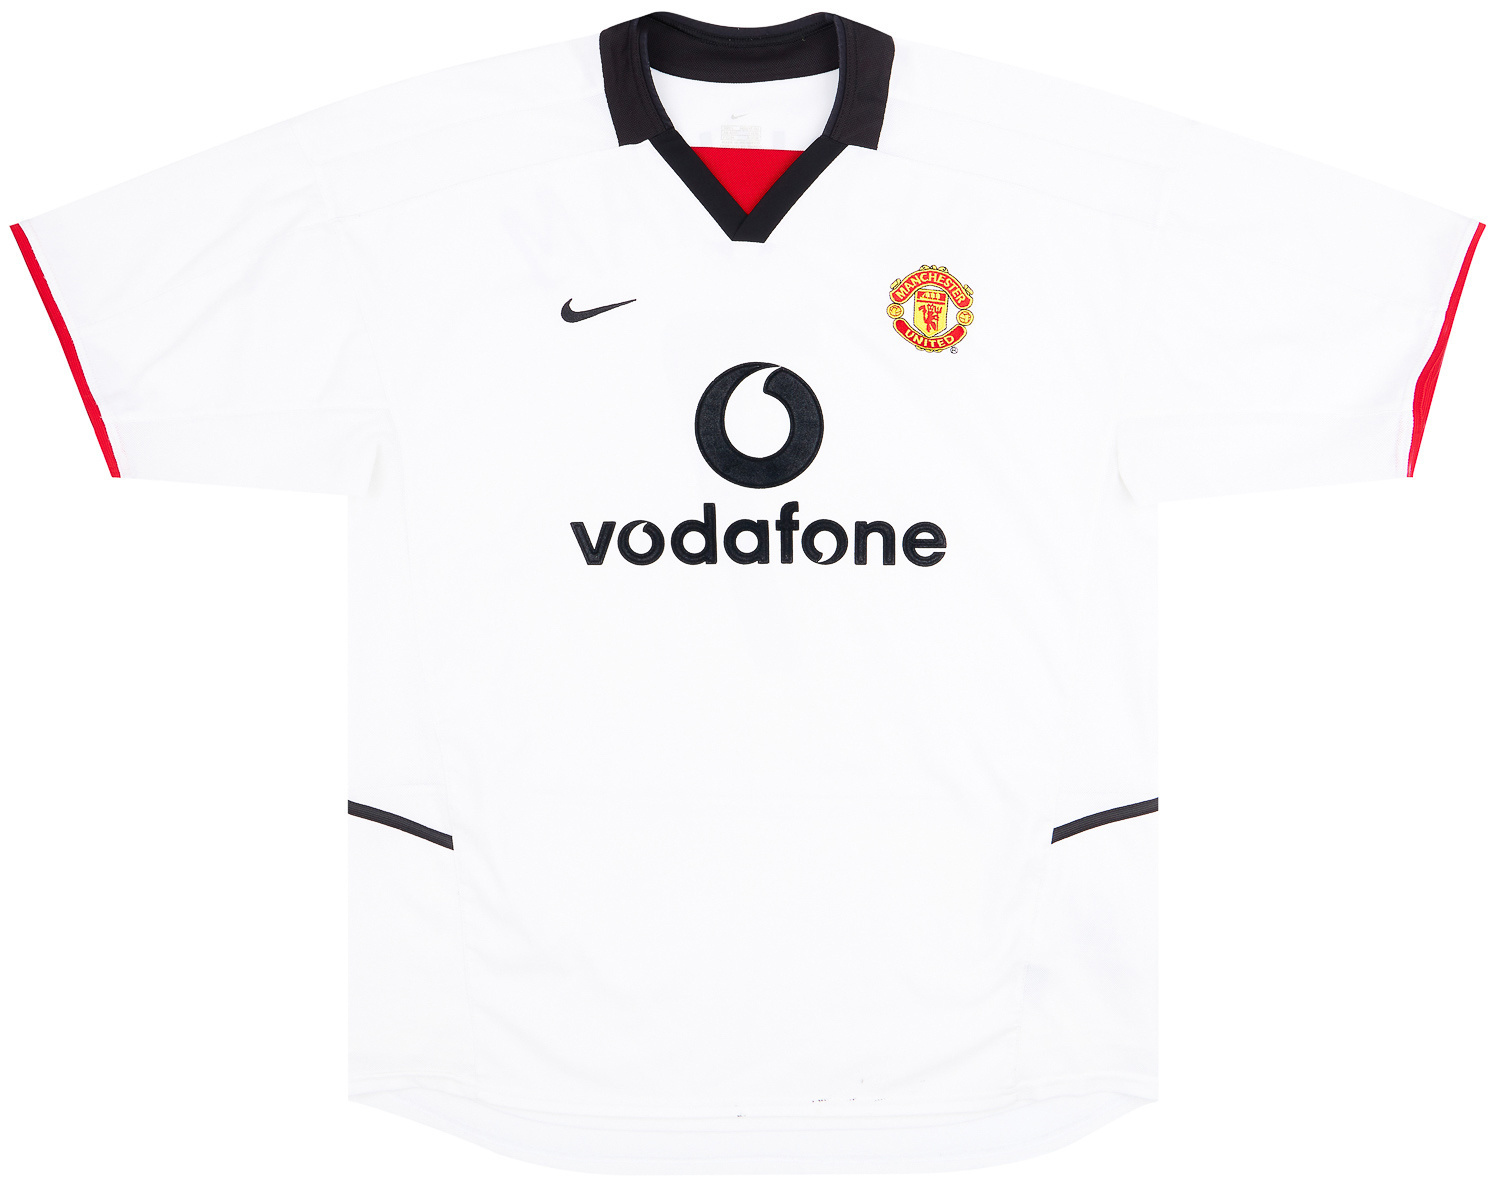 2002-03 Manchester United Away Shirt